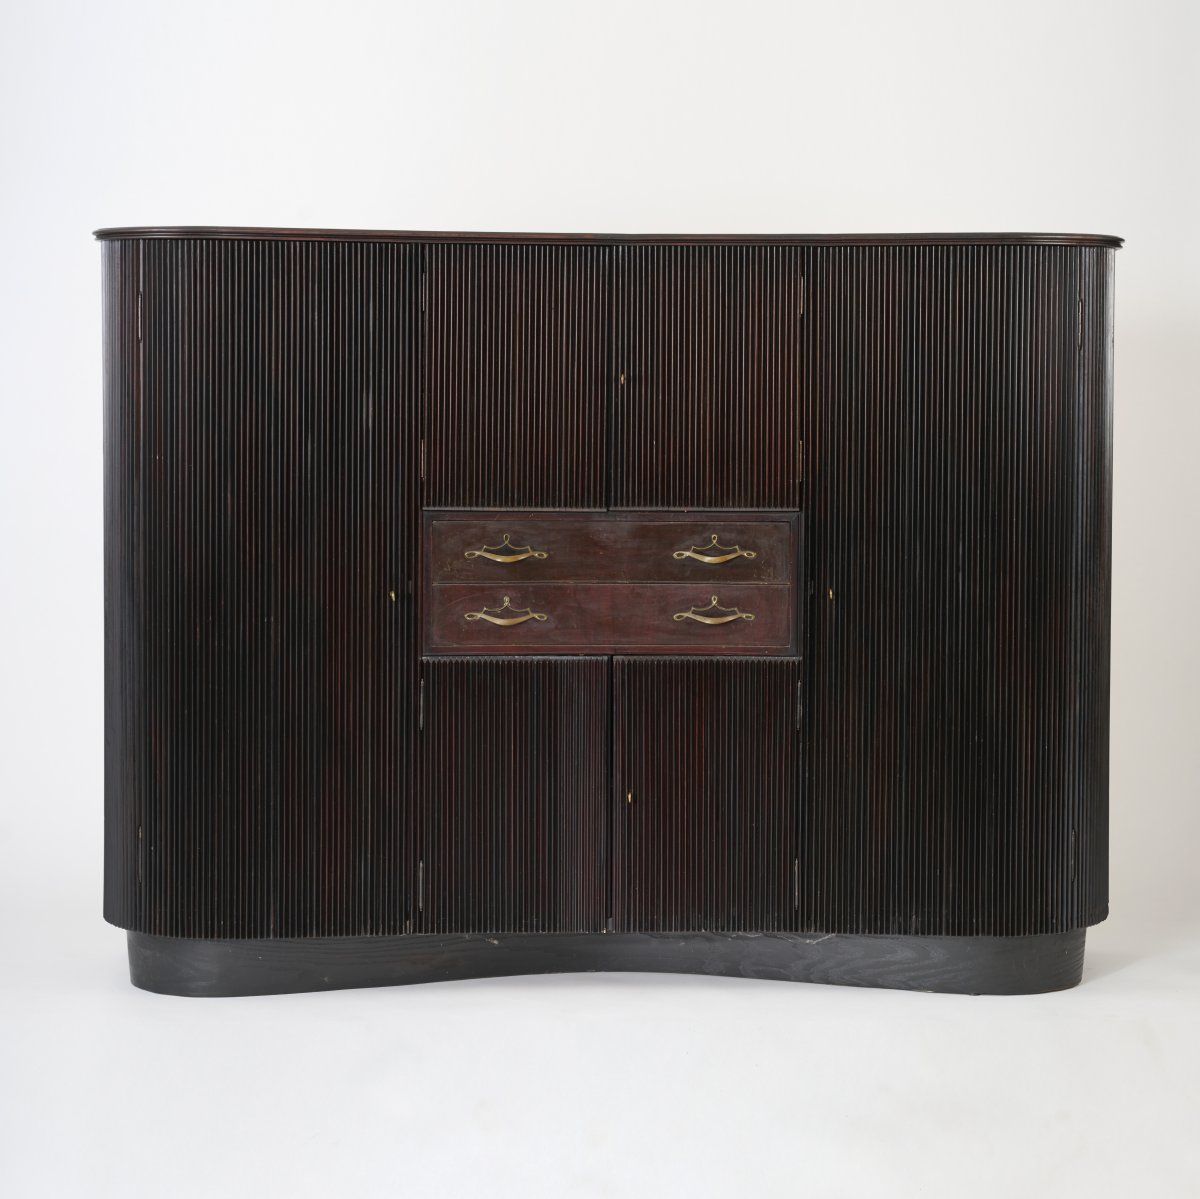 Osvaldo Borsani Sideboard/wardrobe, 1945
H. 159 x 216 x 50 cm. 
Made by ABV Arre&hellip;